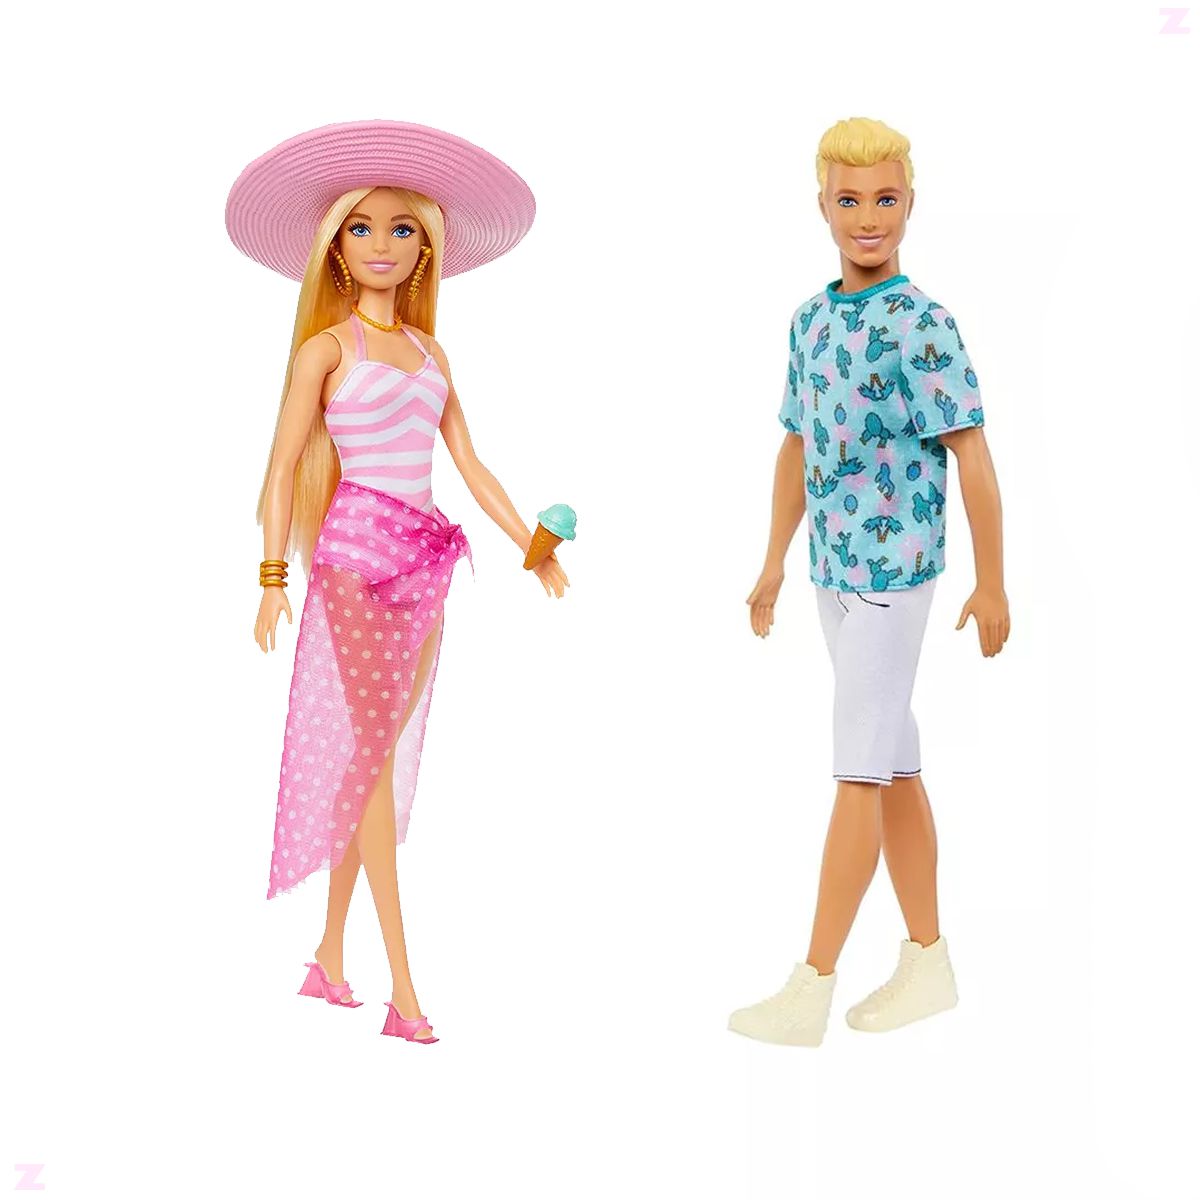 Boneco Ken Loiro Dia de Surf c/ Pet e Acessórios de Praia - Barbie - Mattel